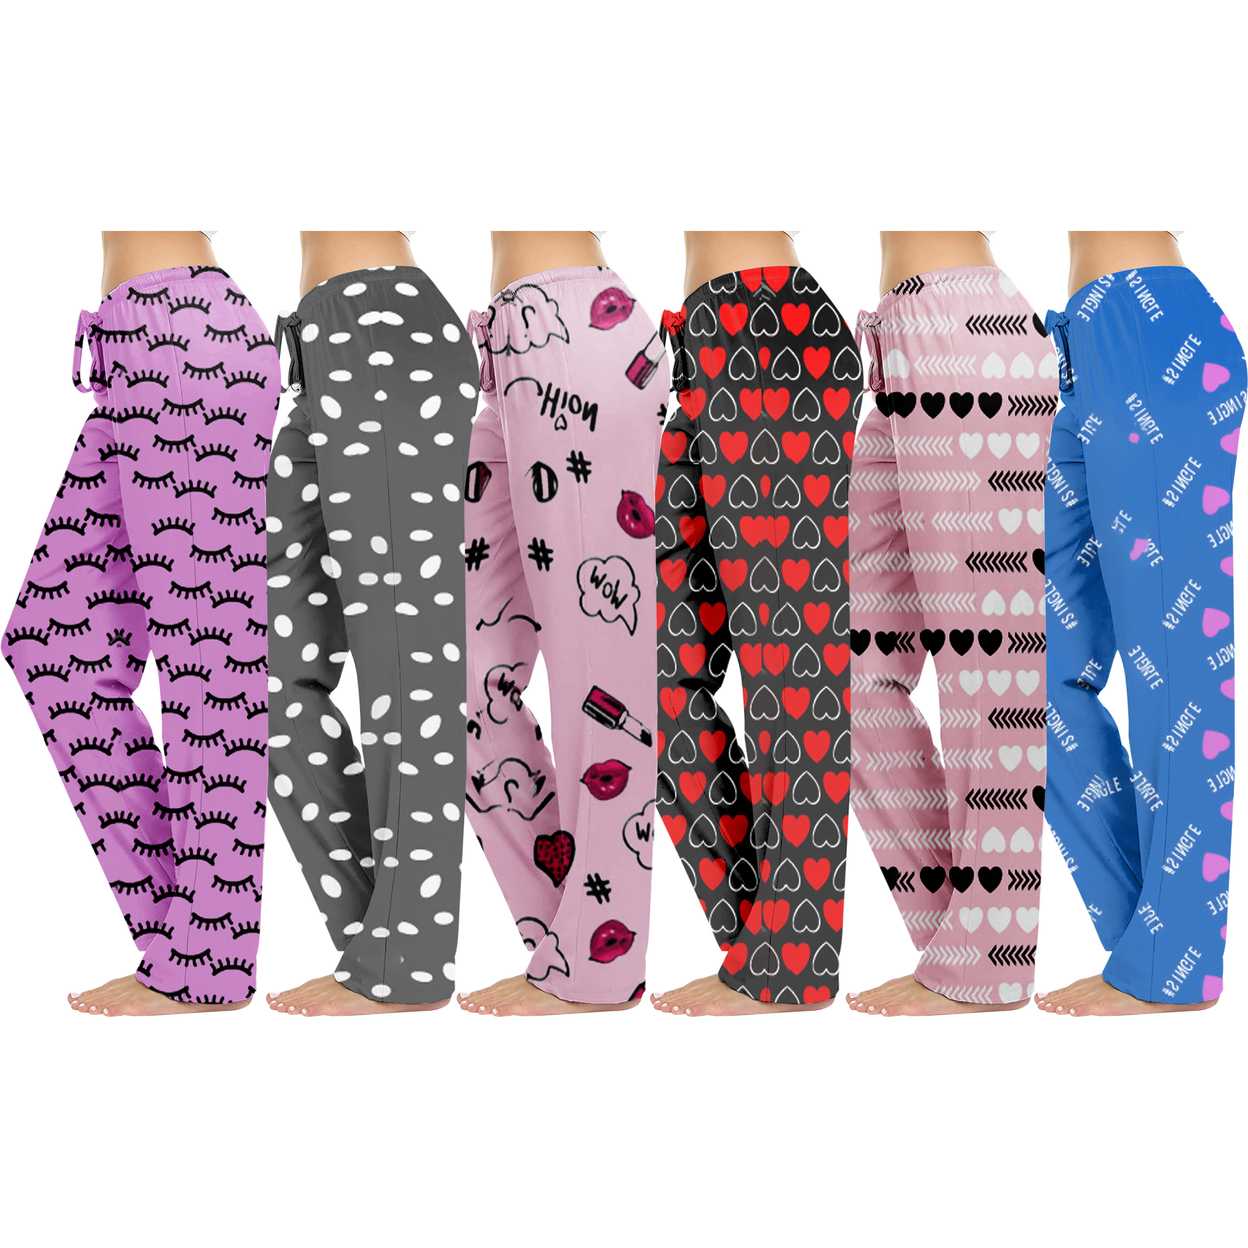 4-Pack: Women's Casual Fun Printed Lightweight Lounge Terry Knit Pajama Bottom Pants - Large, Love